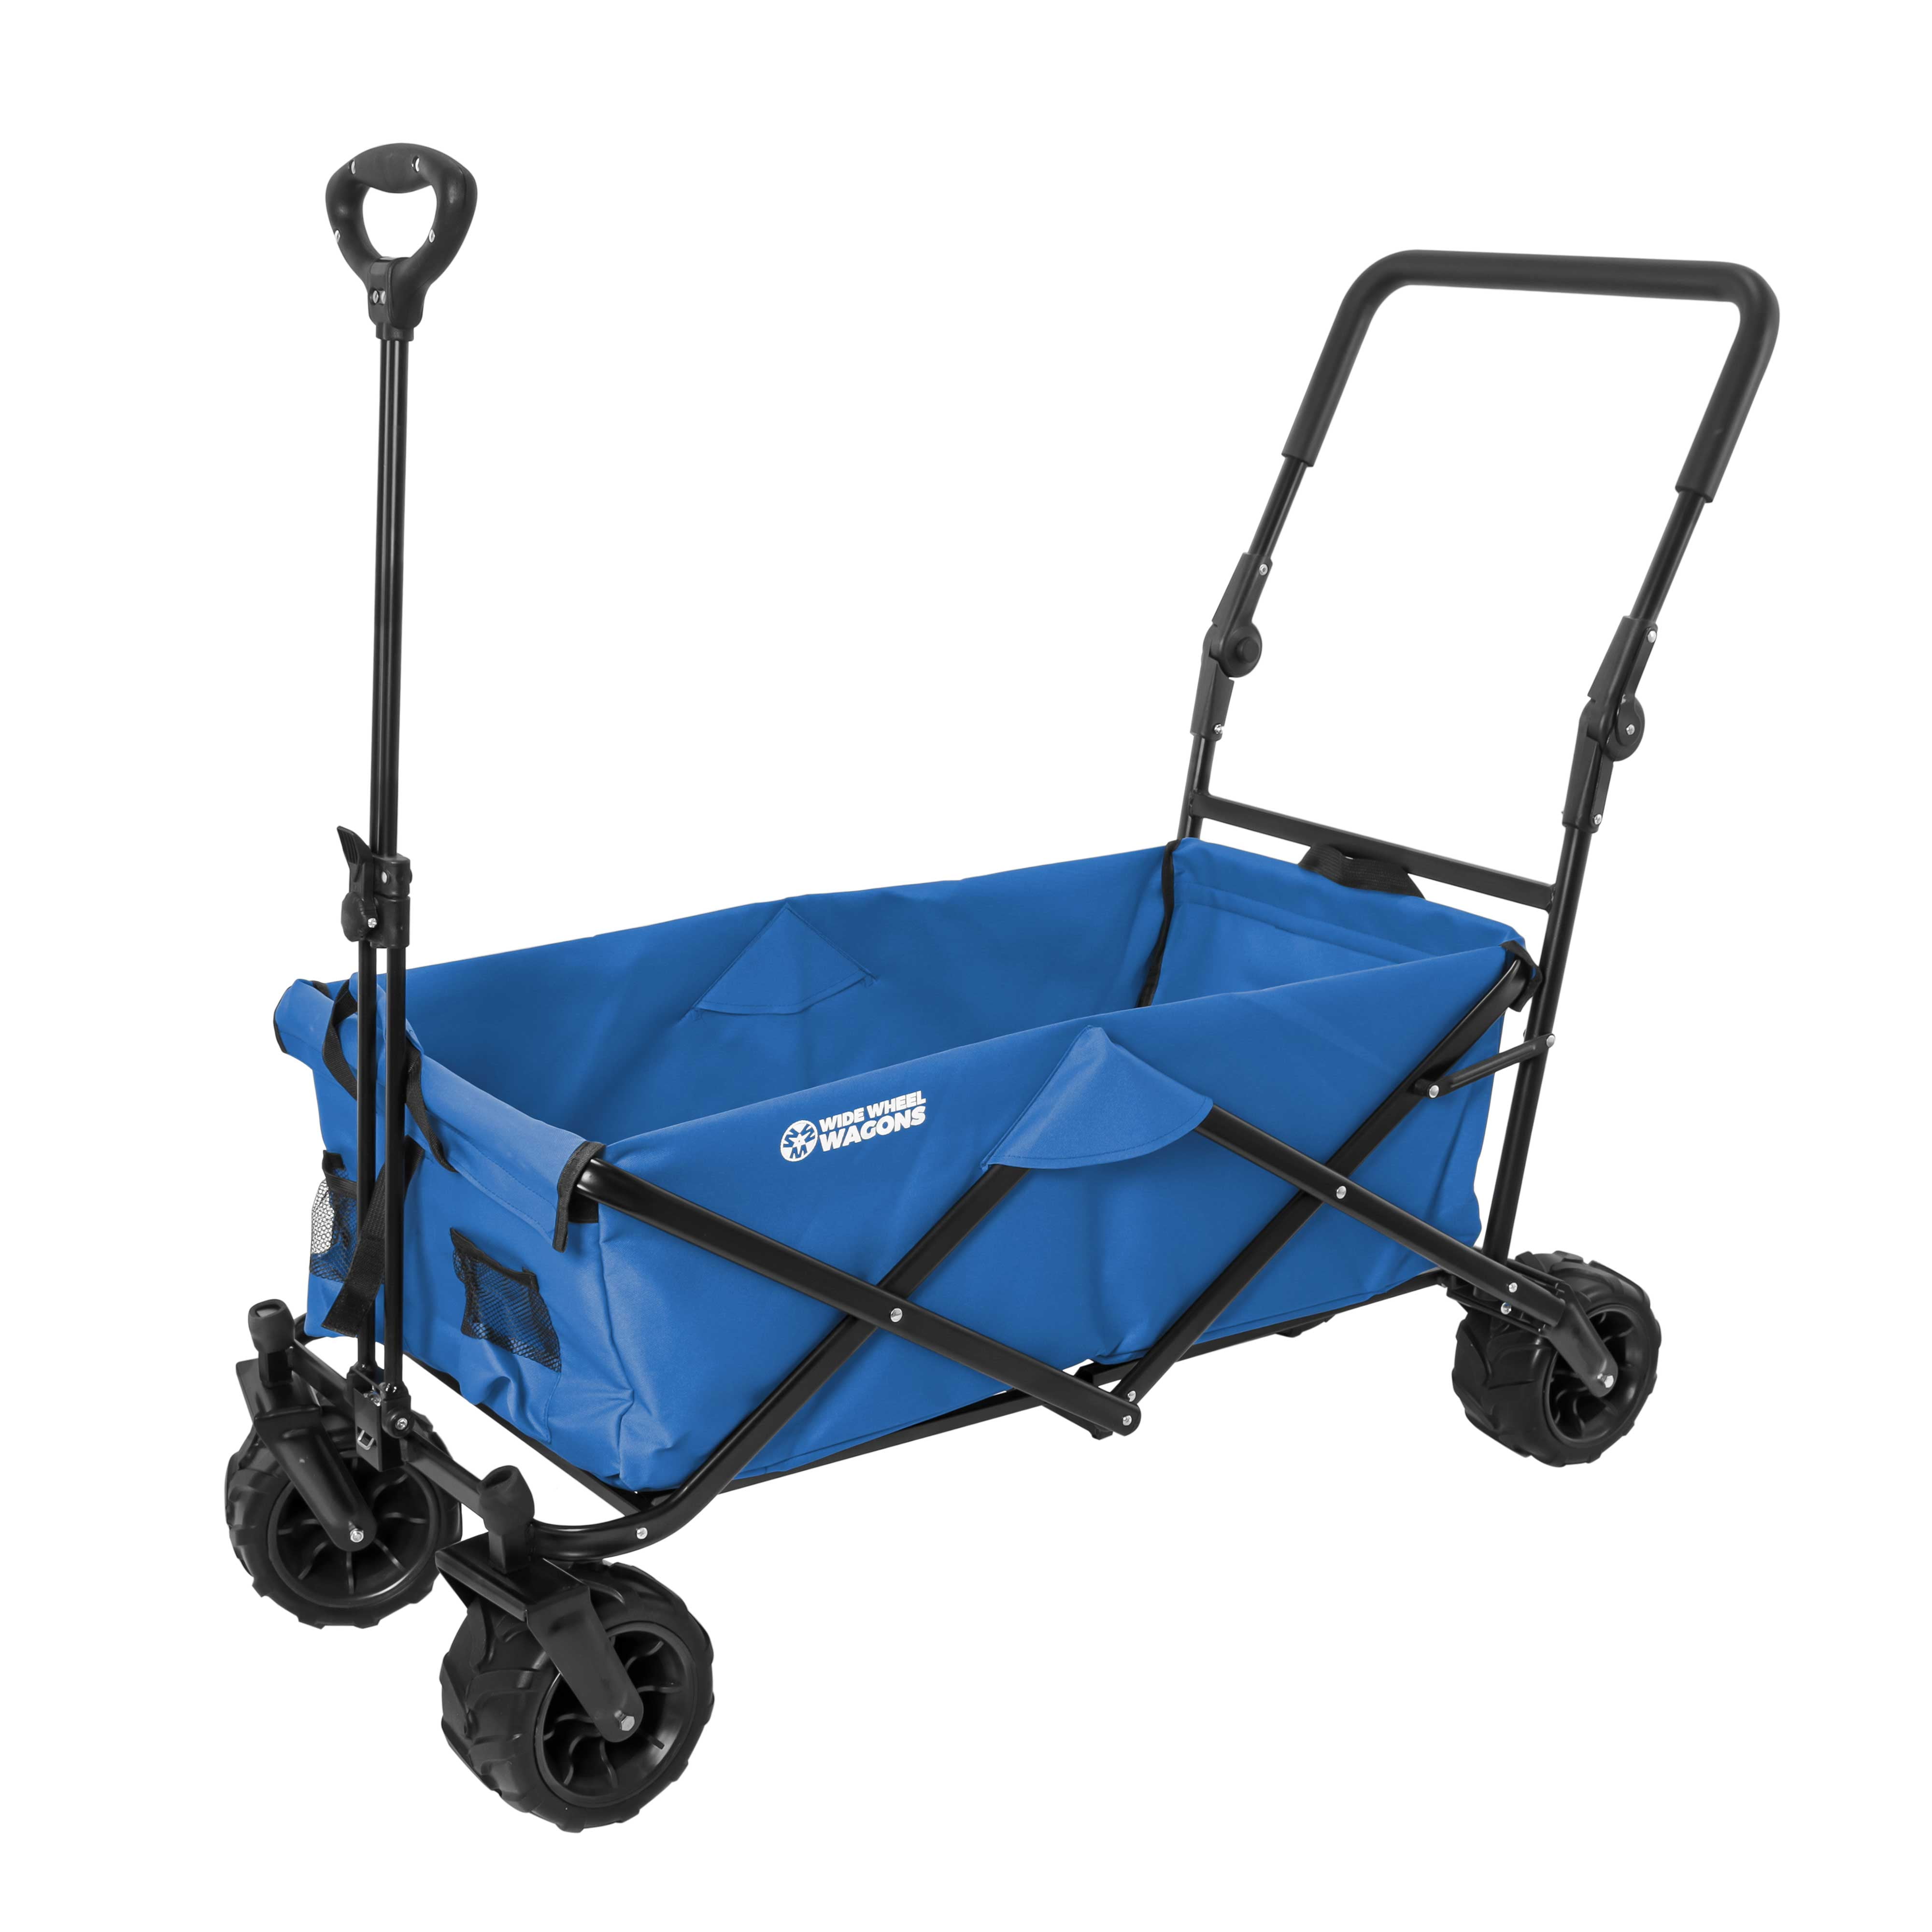 NEW Folding Wagon portable Gray for outdoor park beach 